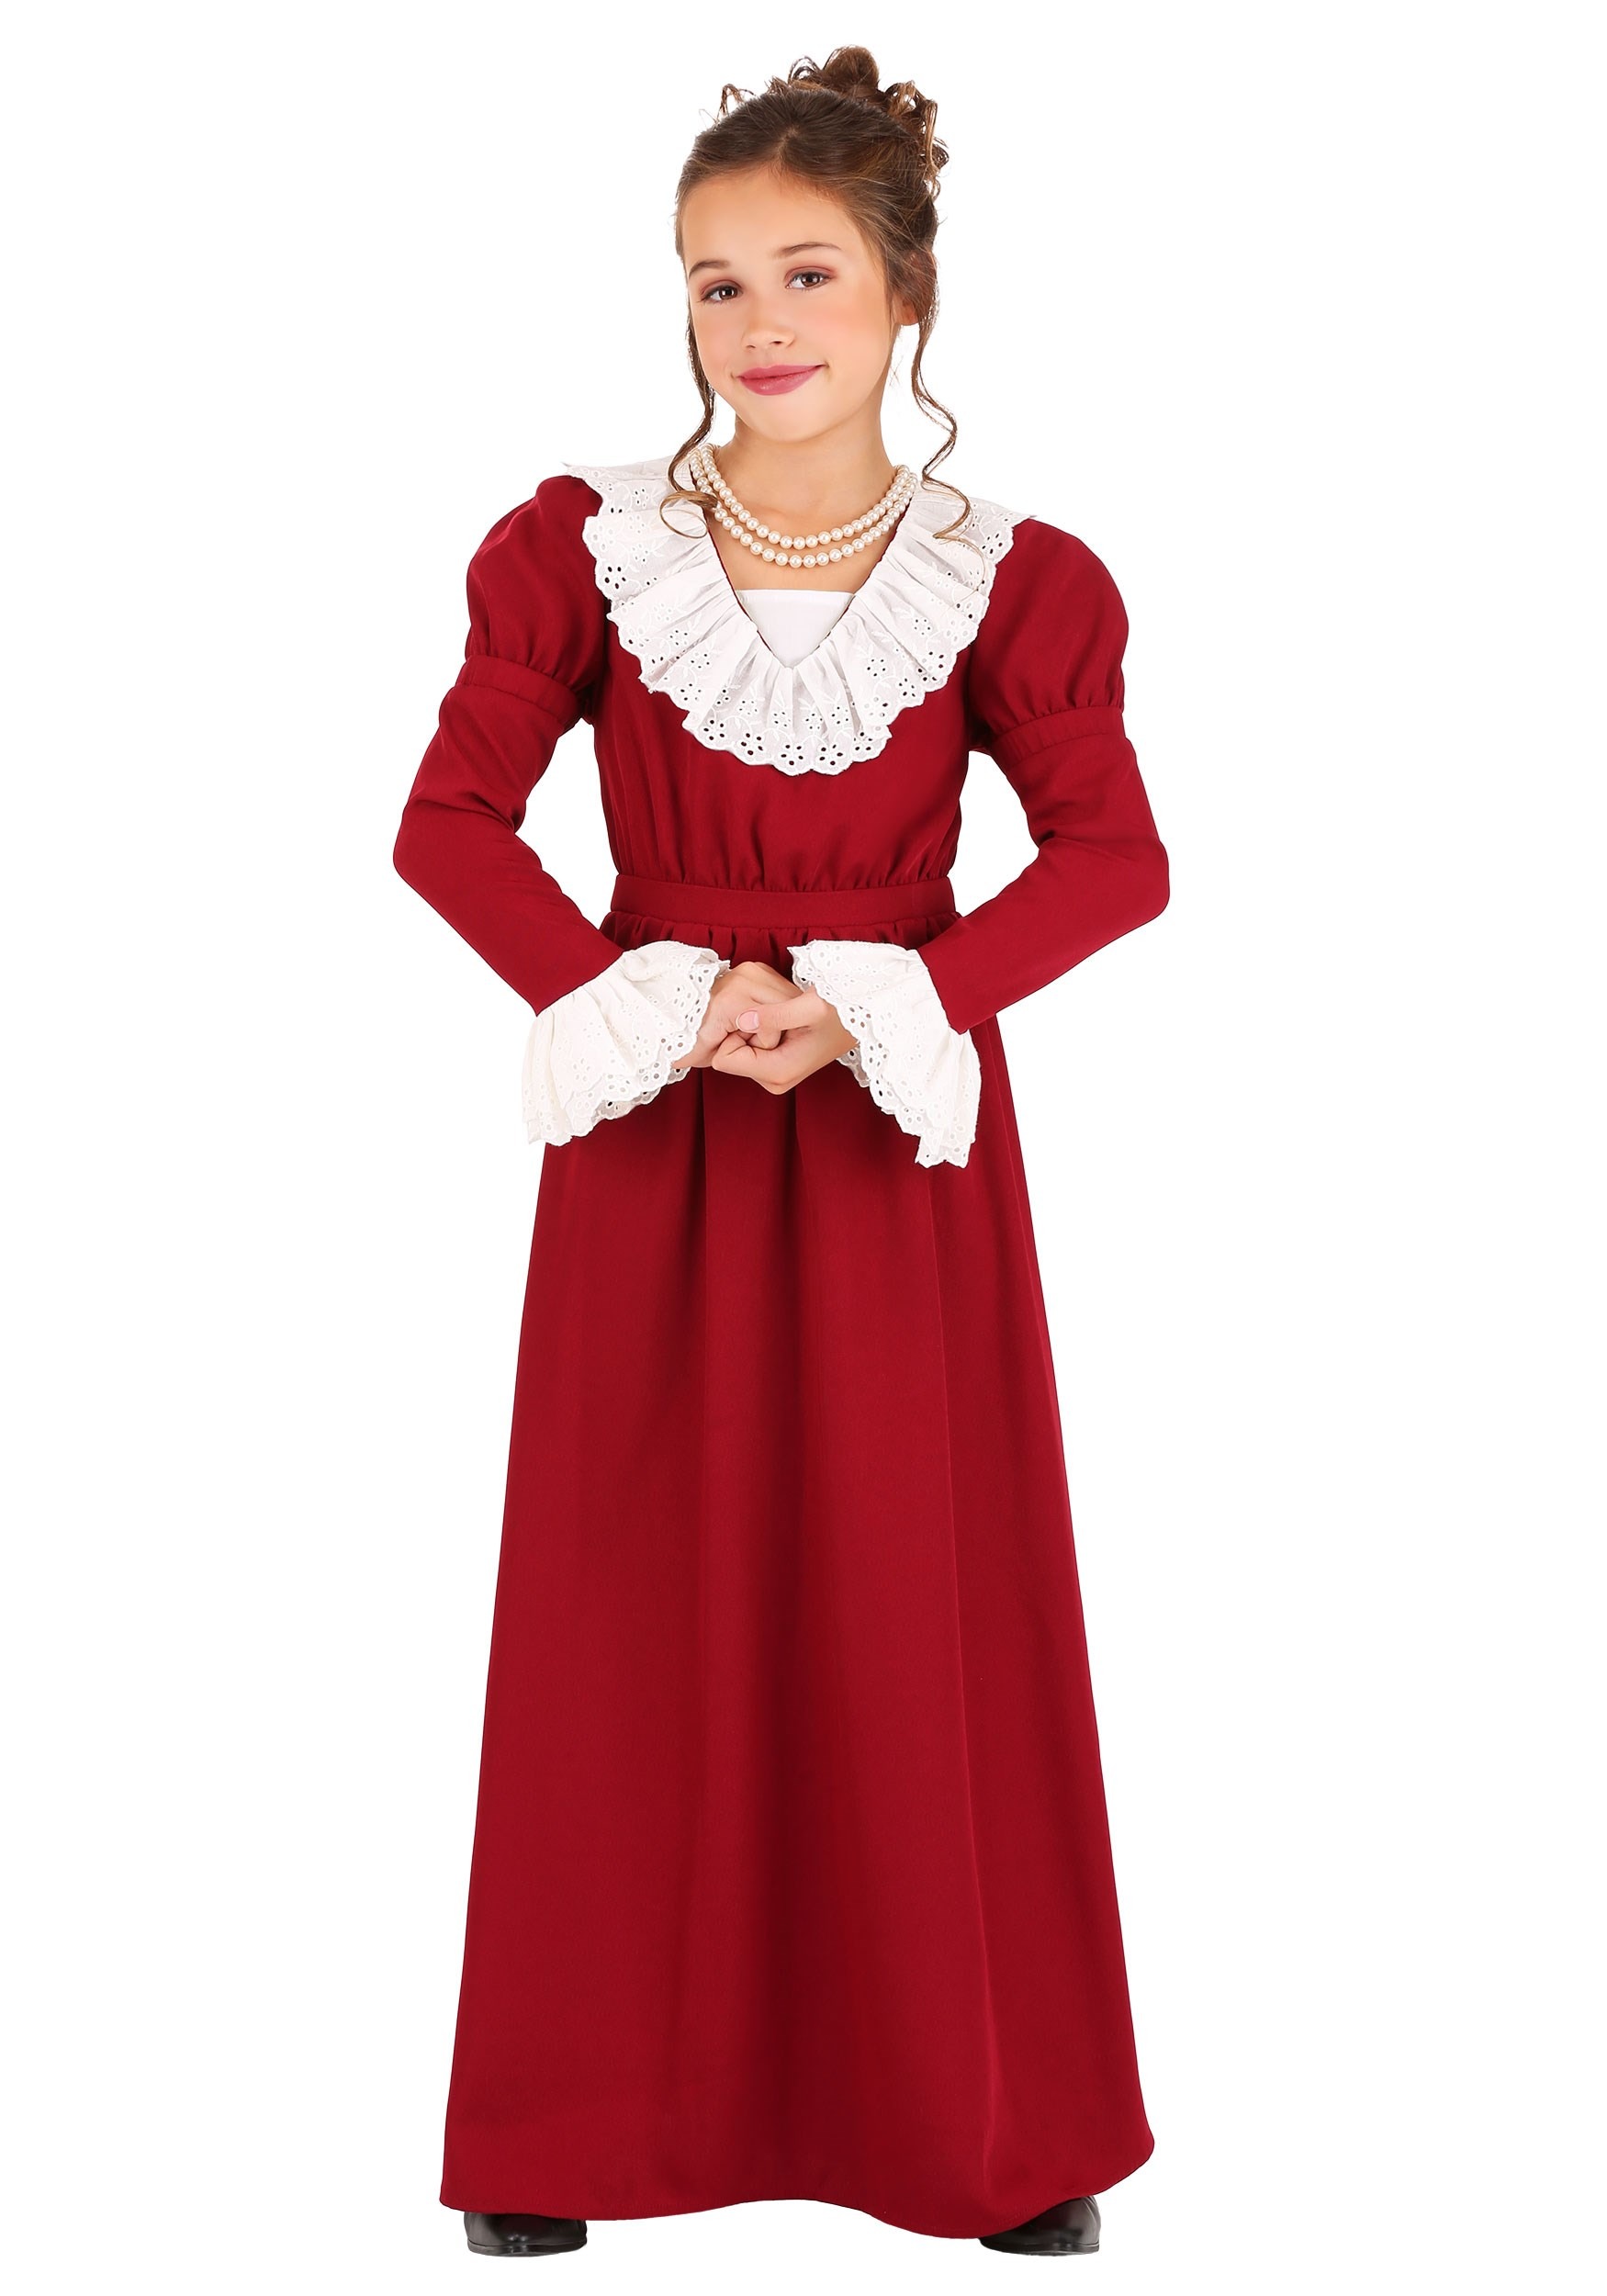 Abigail Adams Costume for Kids